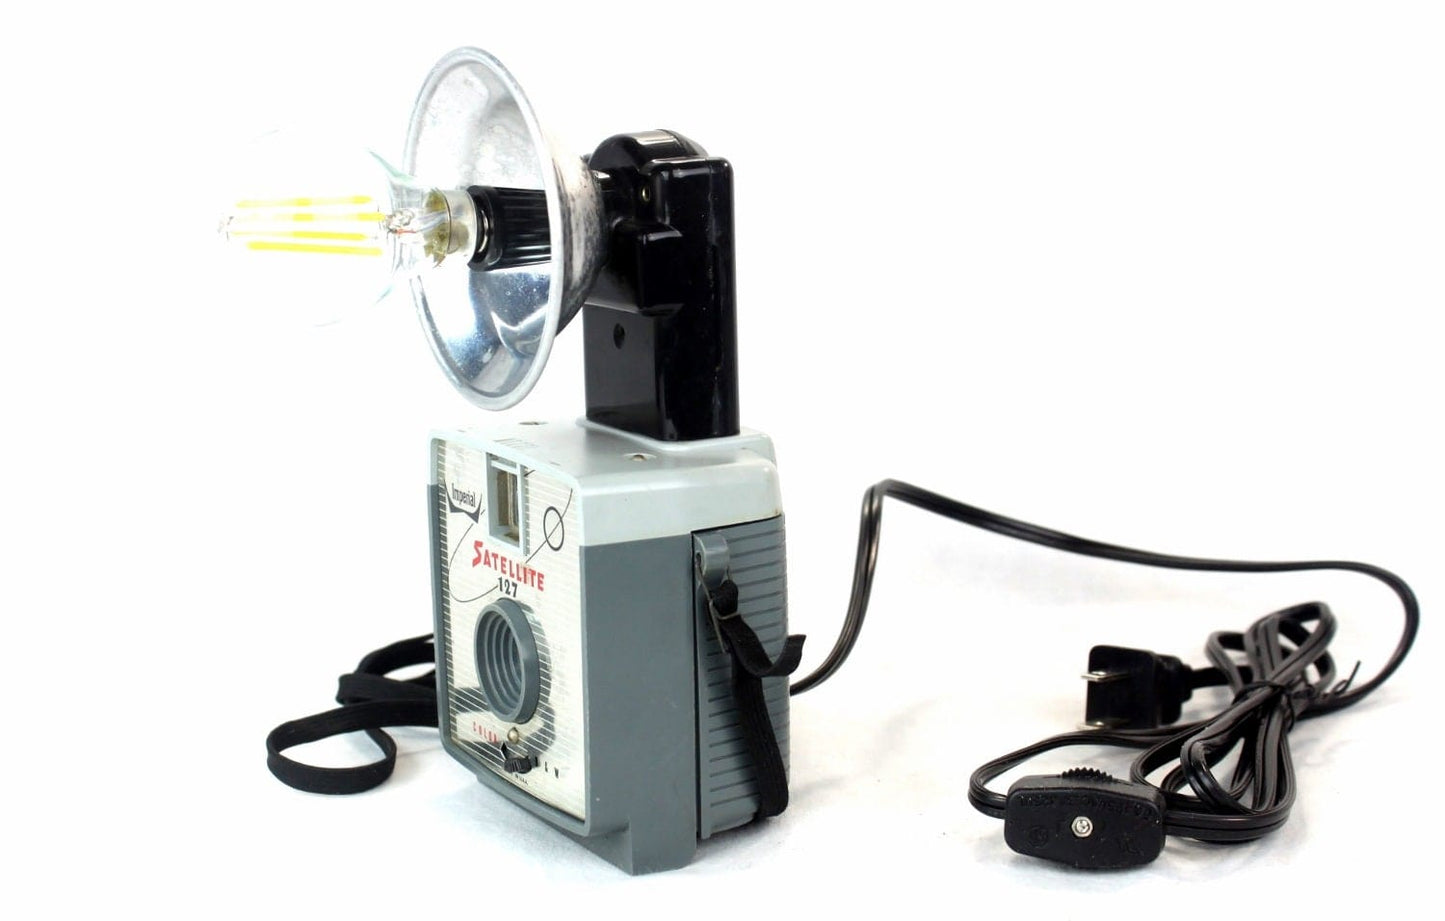 LightAndTimeArt Lamps Vintage Accent Reading Lamp  - Imperial Satellite 127